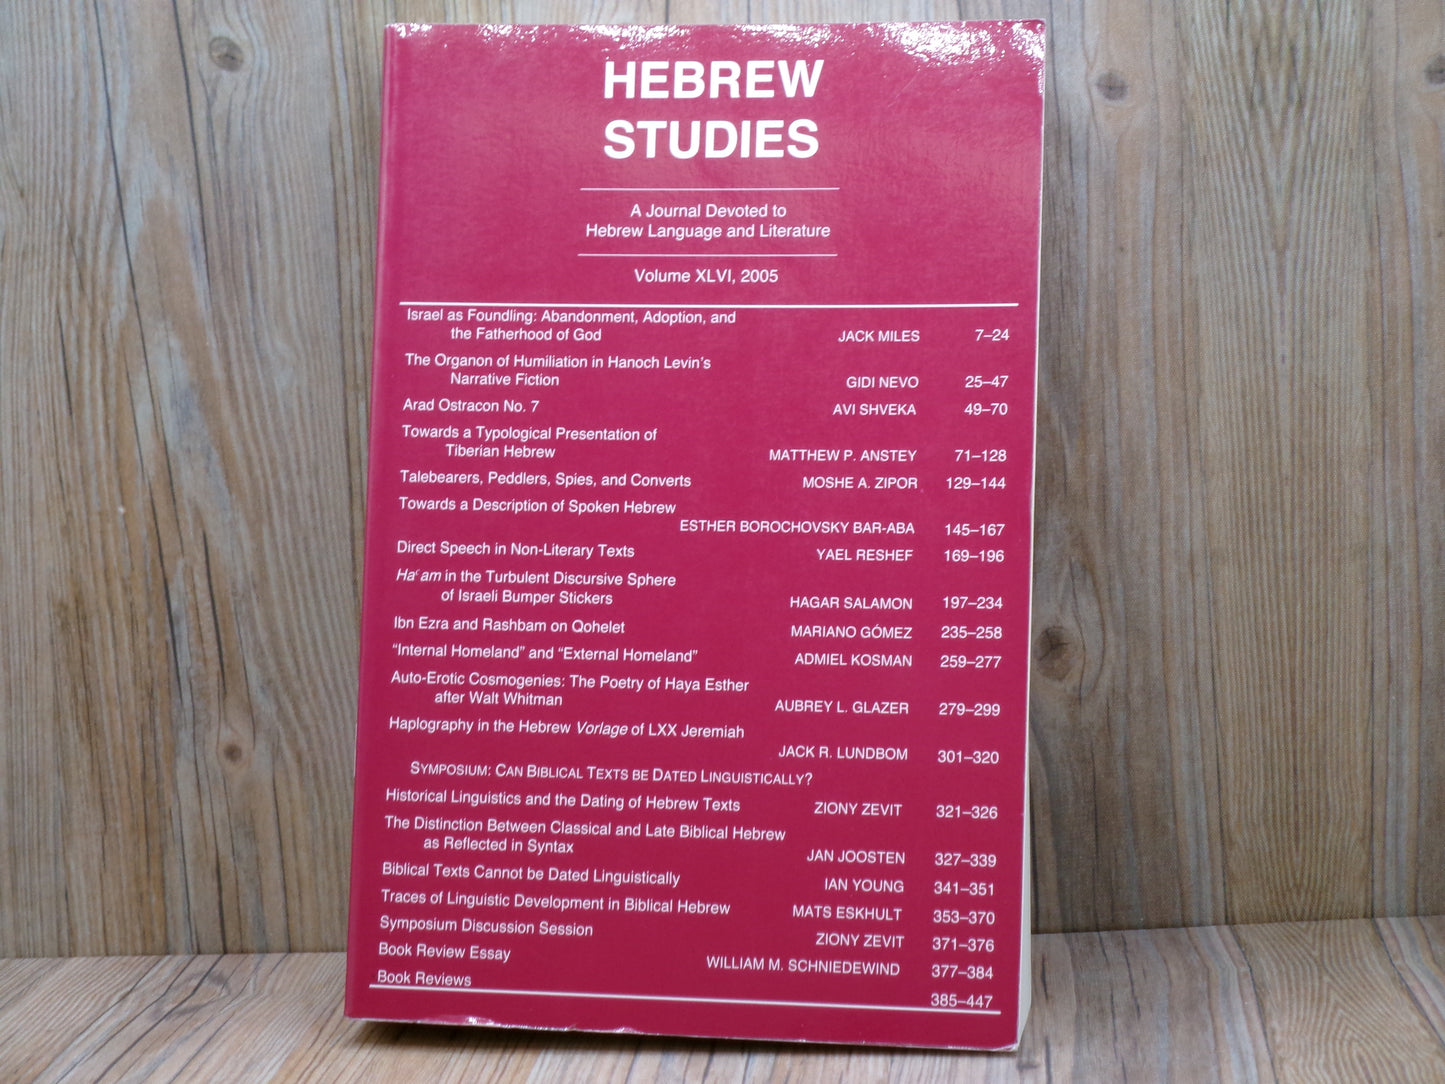 Hebrew Studies: A Journal Devoted to Hebrew Language and Literature by Ziony Zevit